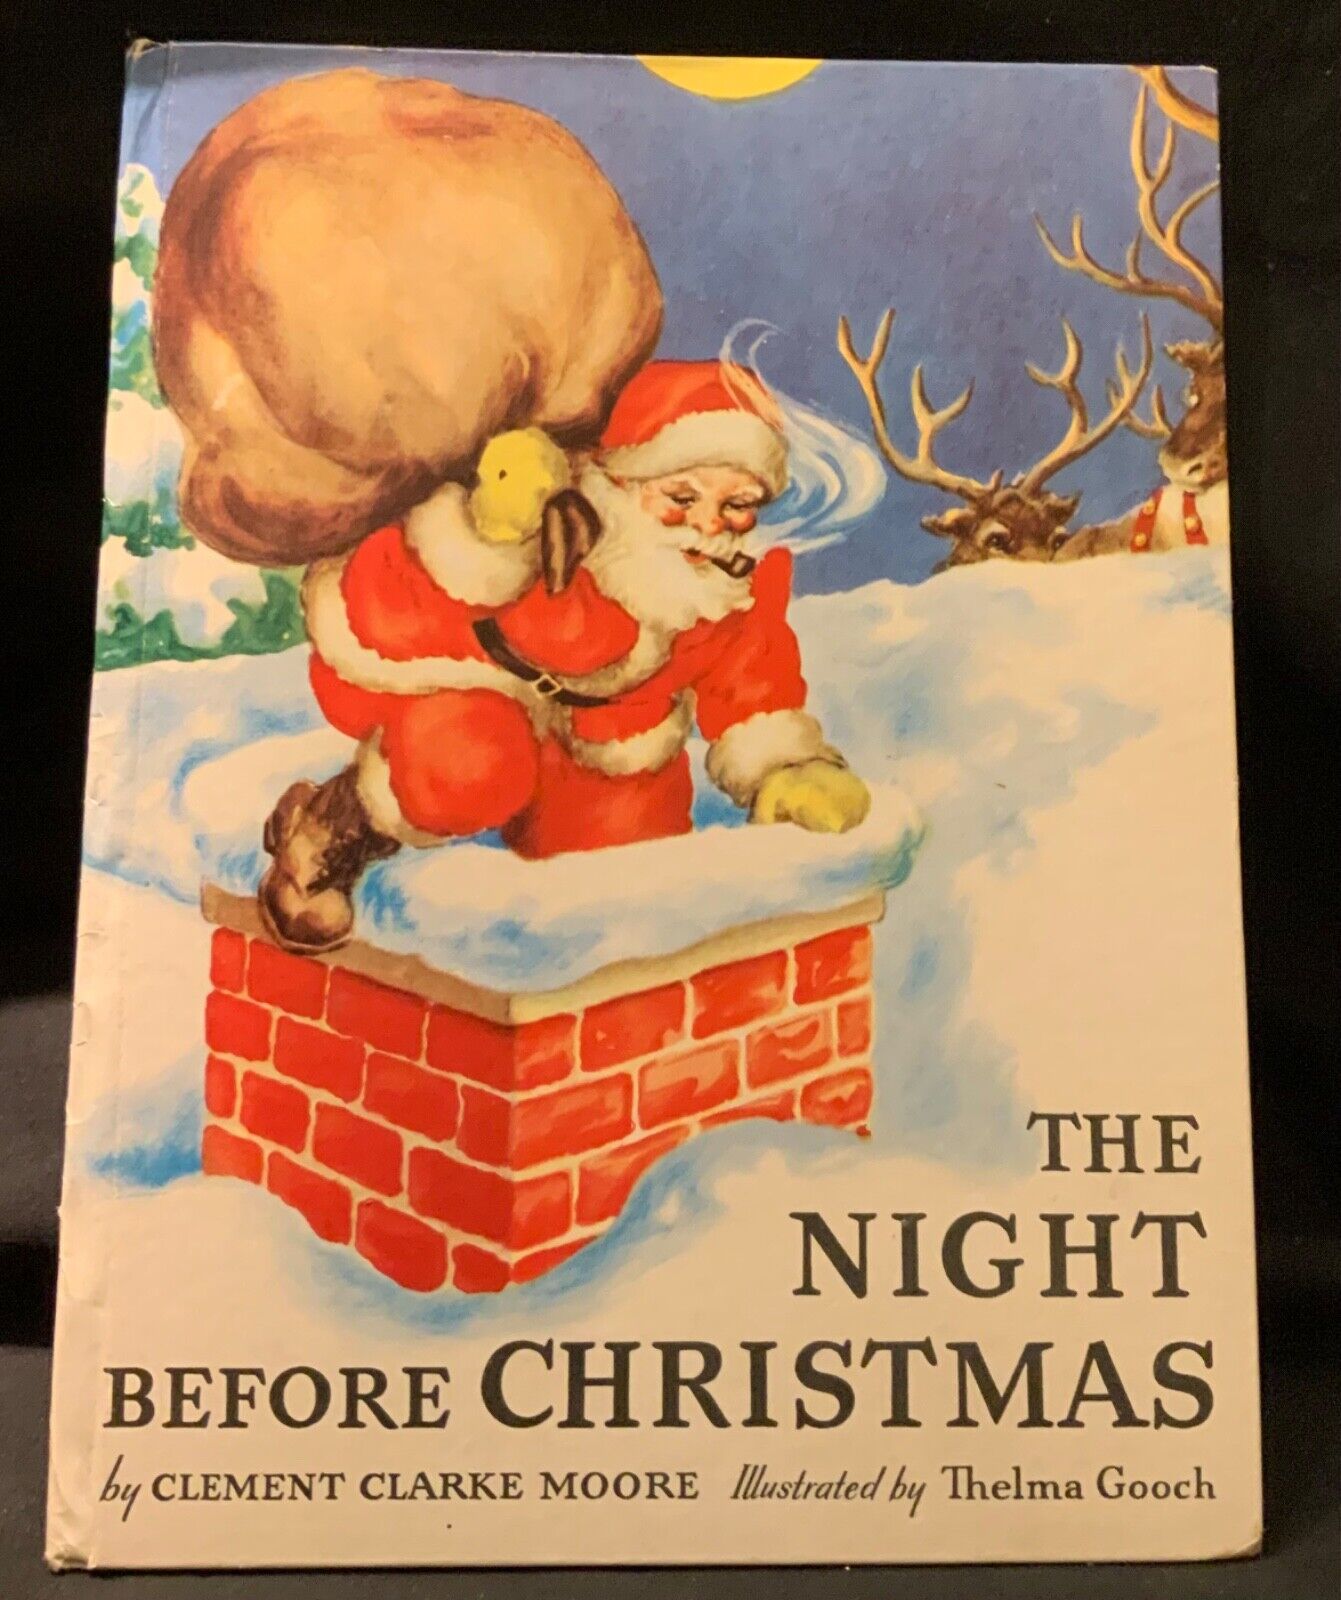 VINTAGE 1937 GROSSET & DUNLAP HARDCOVER BOOK - ‘THE NIGHT. BEFORE CHRISTMAS’